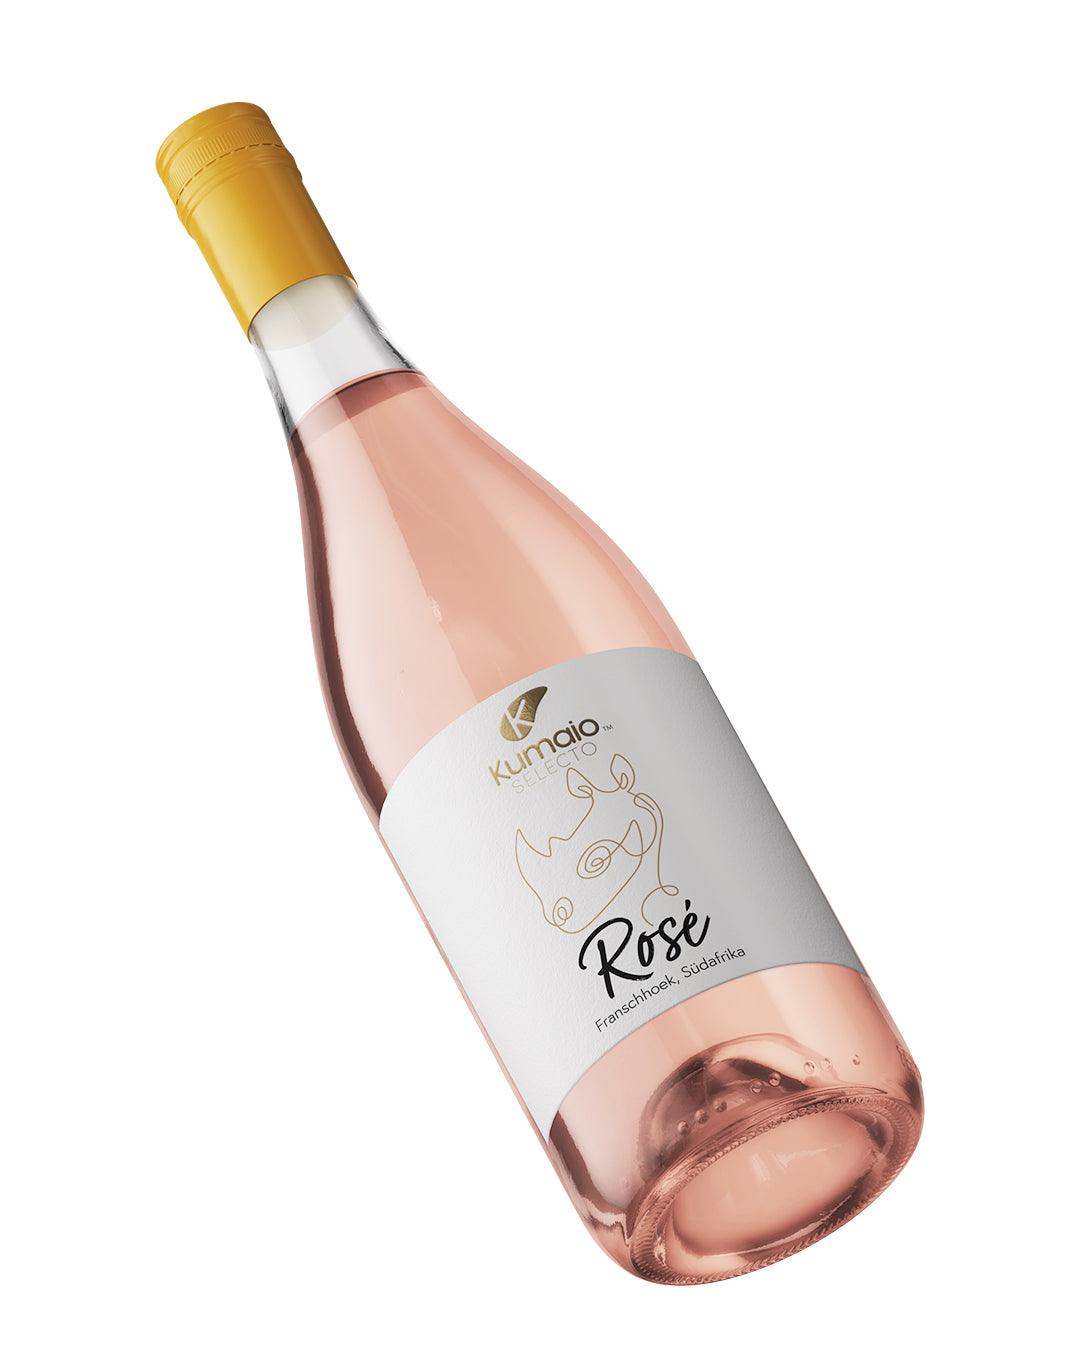 ROSÉ Wein – Kumaio™ Selecto